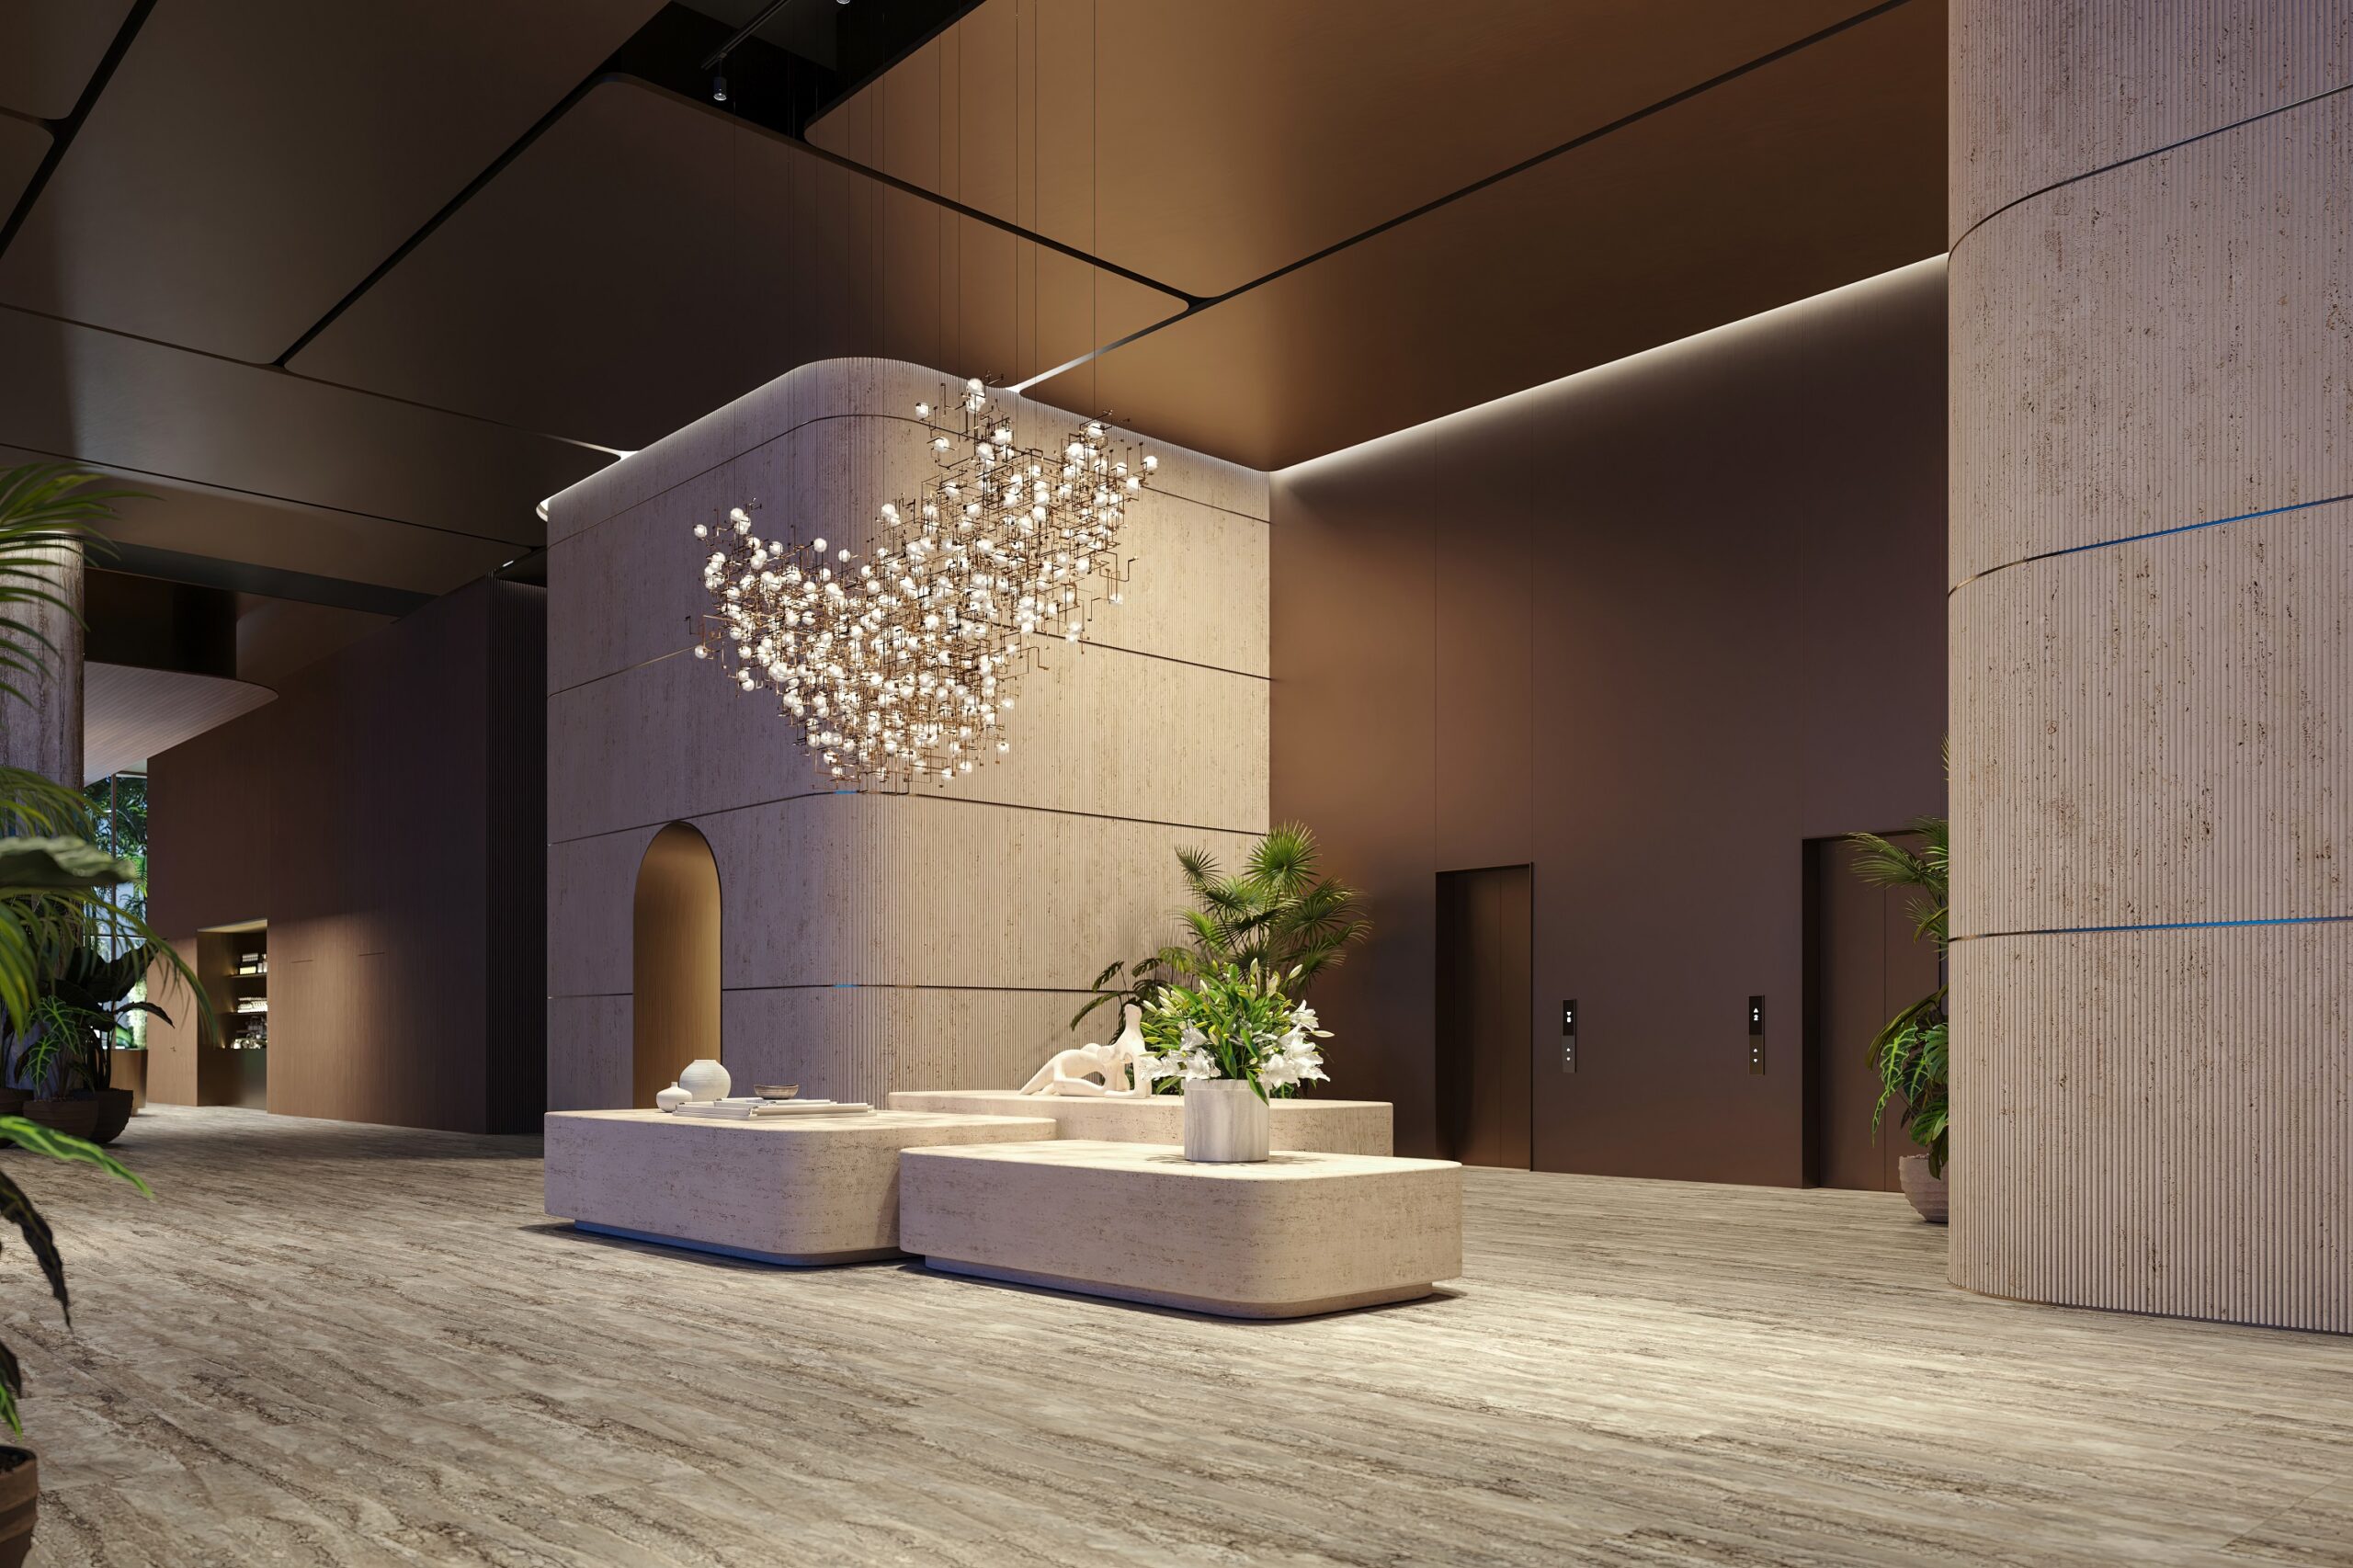 1428 Brickell Avenue - Chatburn Living - Lobby of Elevator